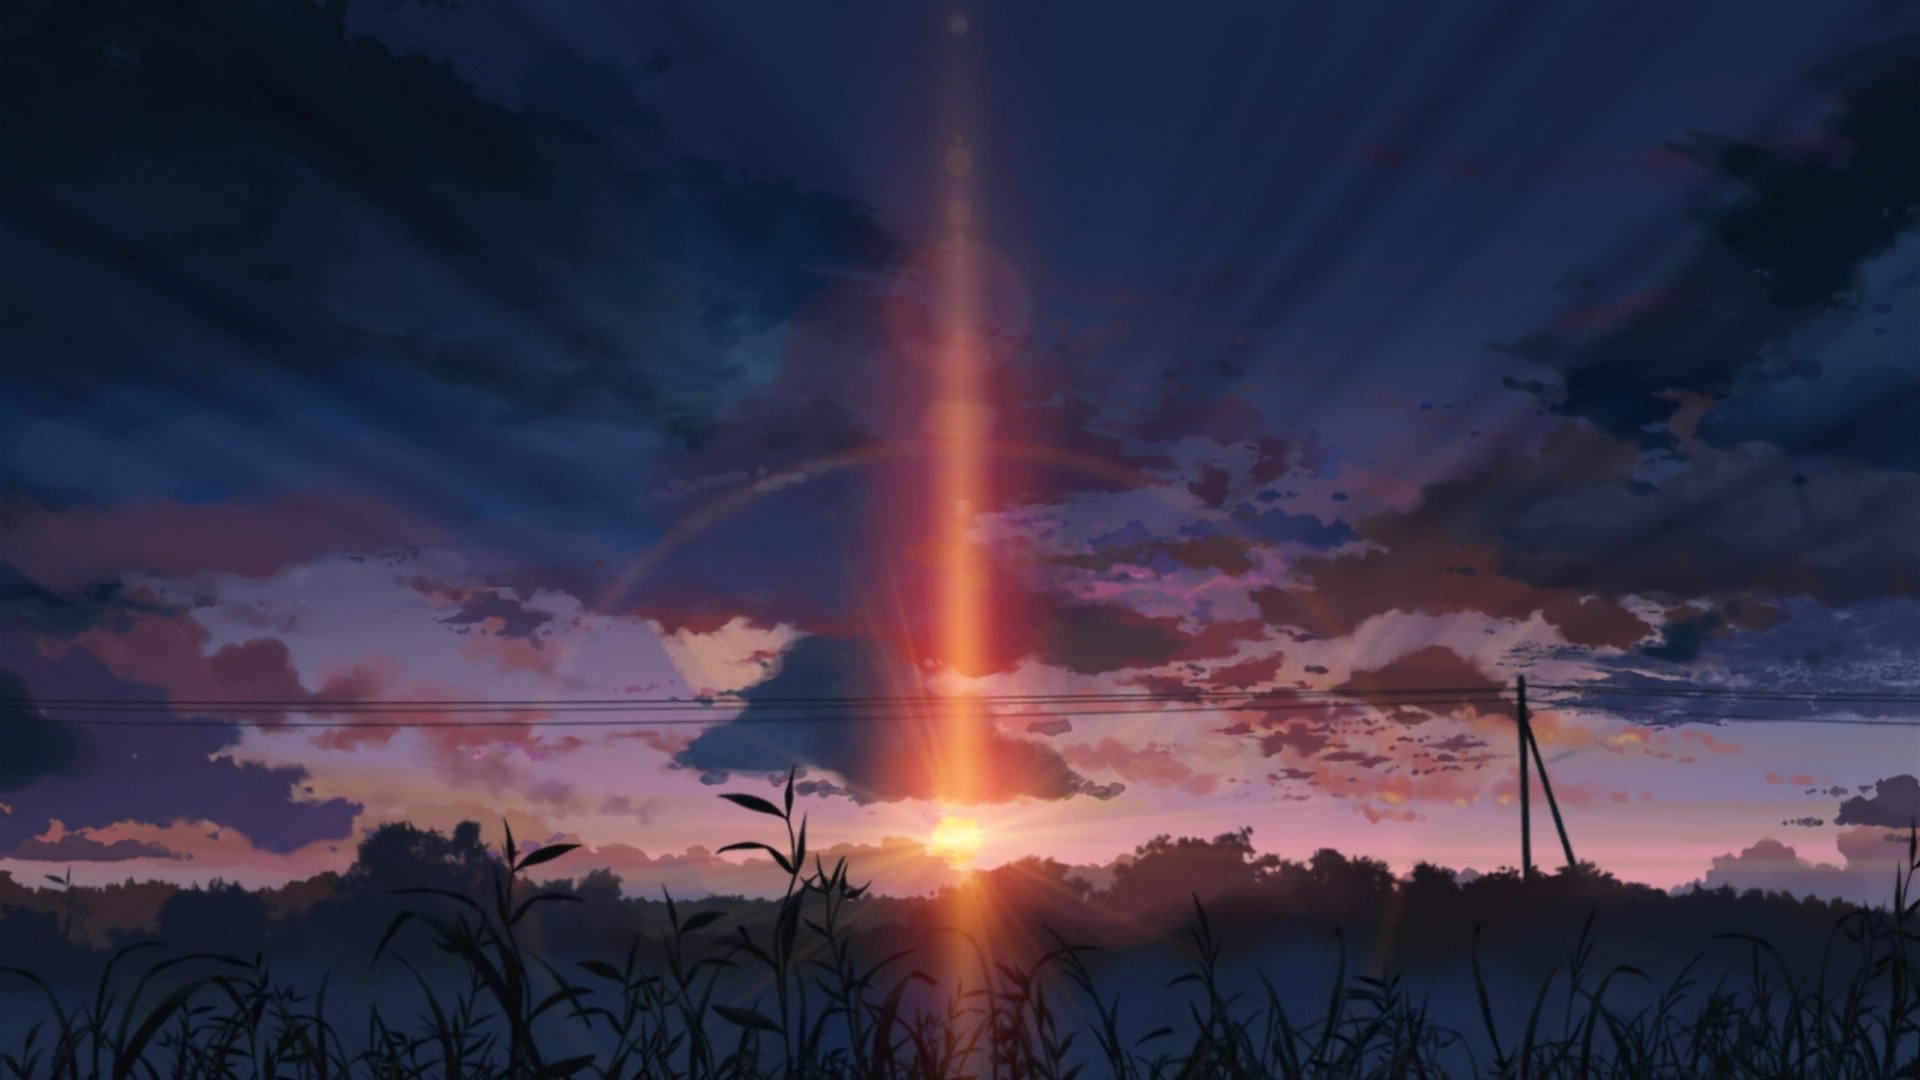 1920x1080 sunset 5 centimeters per second anime landscape wallpaper JPG 140 kB